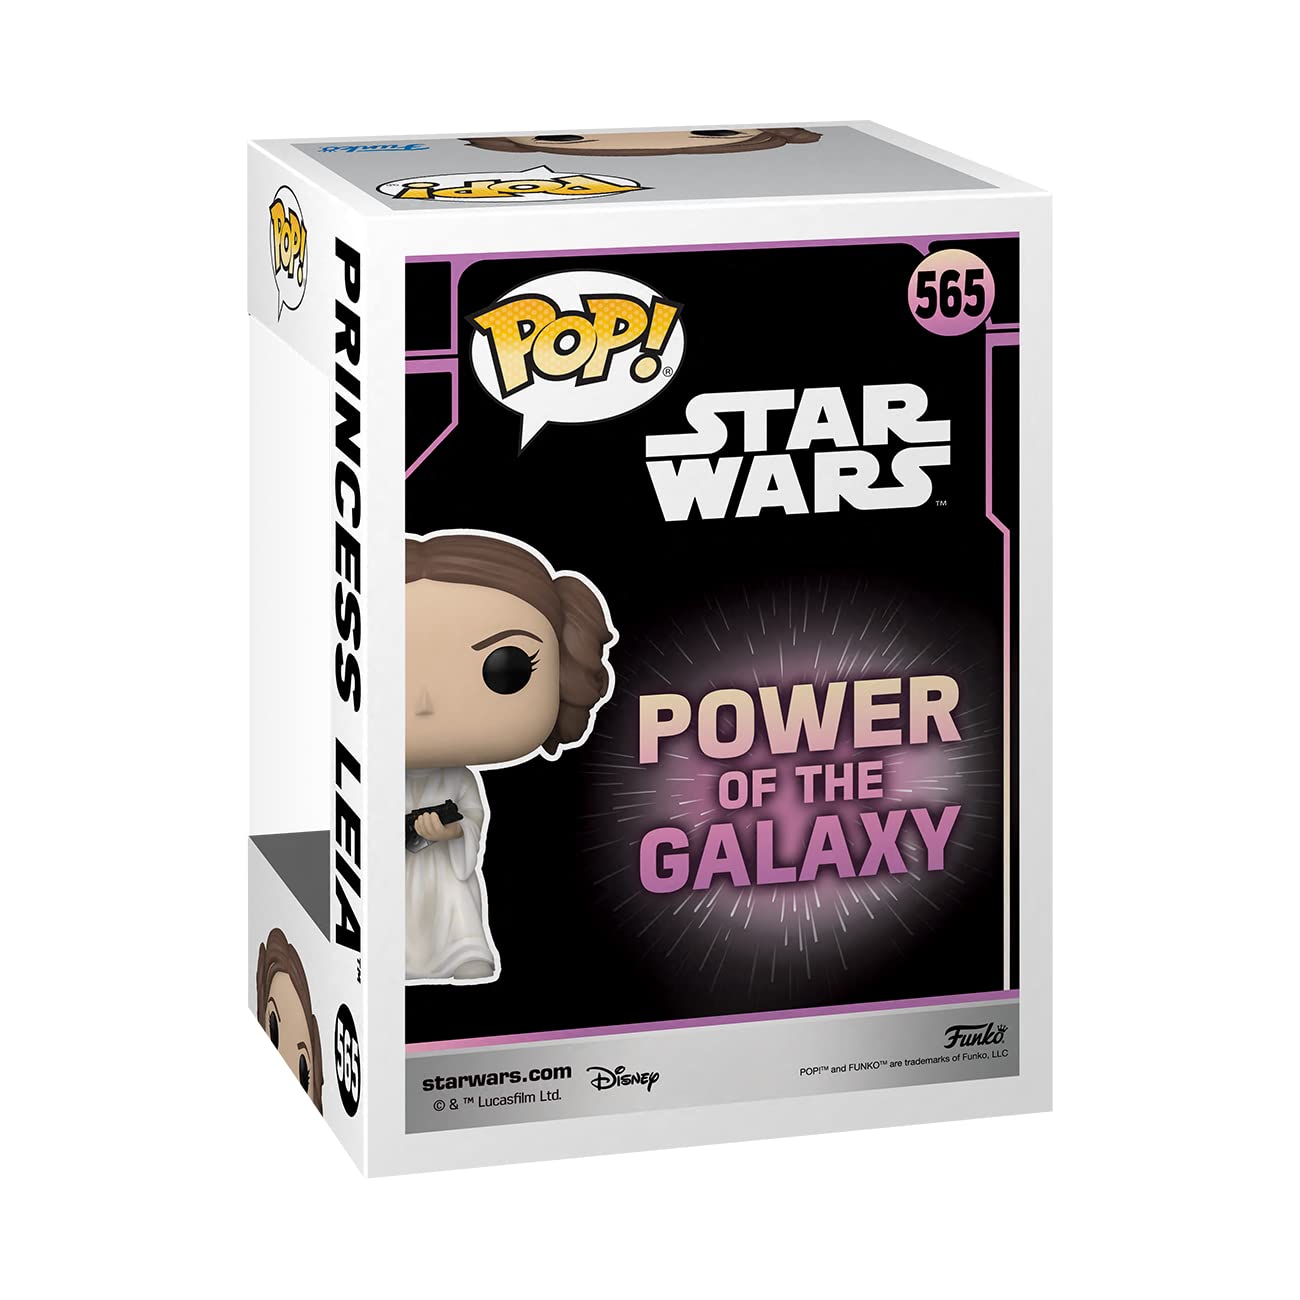 Funko Pop! Star Wars: Power of The Galaxy - Leia, Multicolor